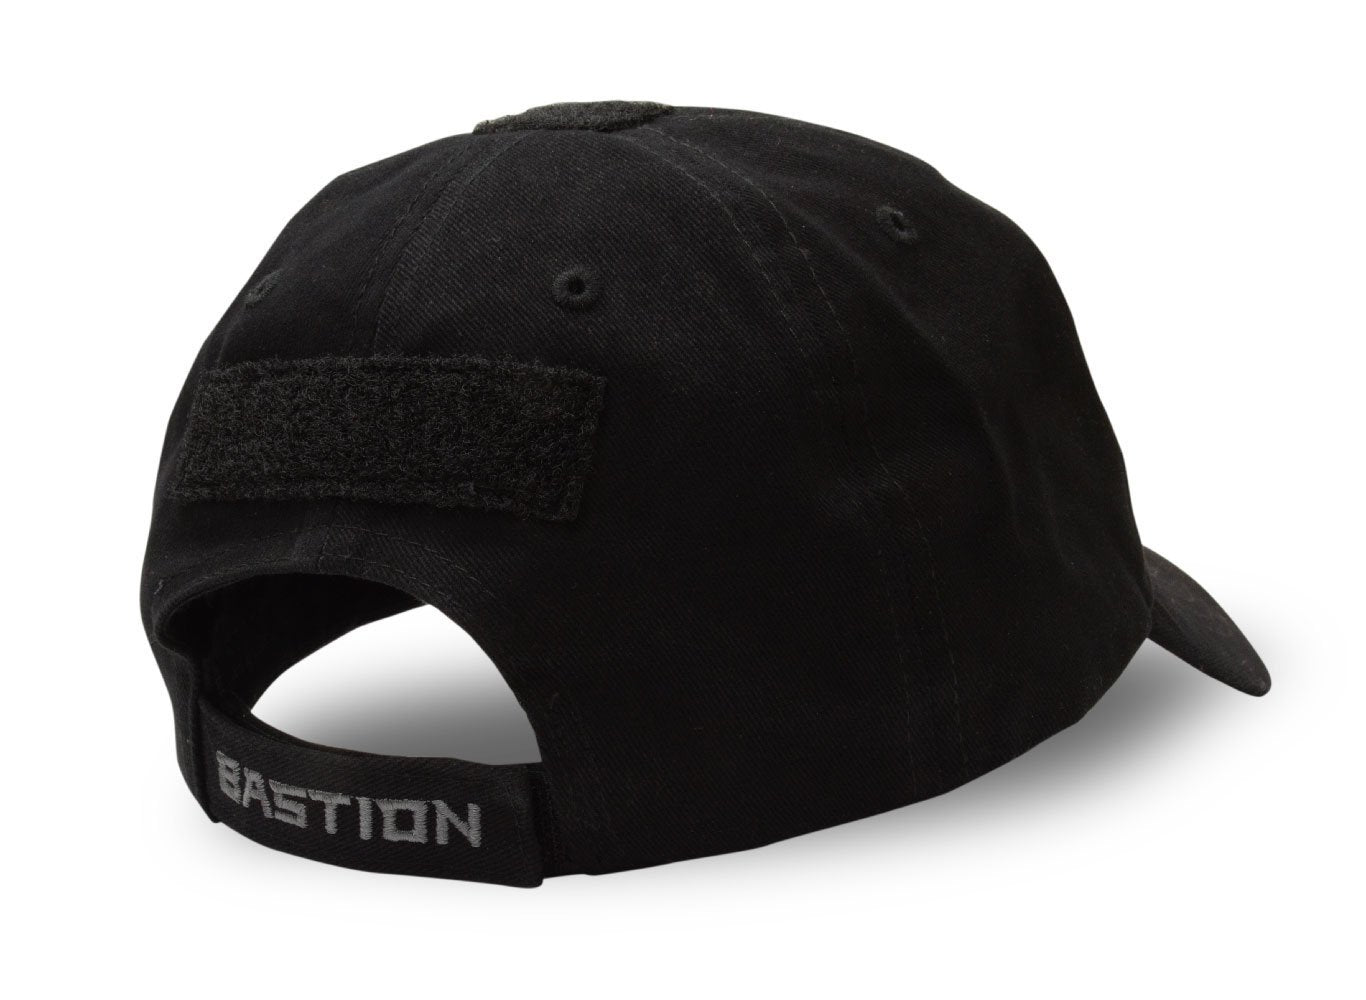 Bastion Special Forces Operator Tactical Cap Hat Black + Free Patch Bundle